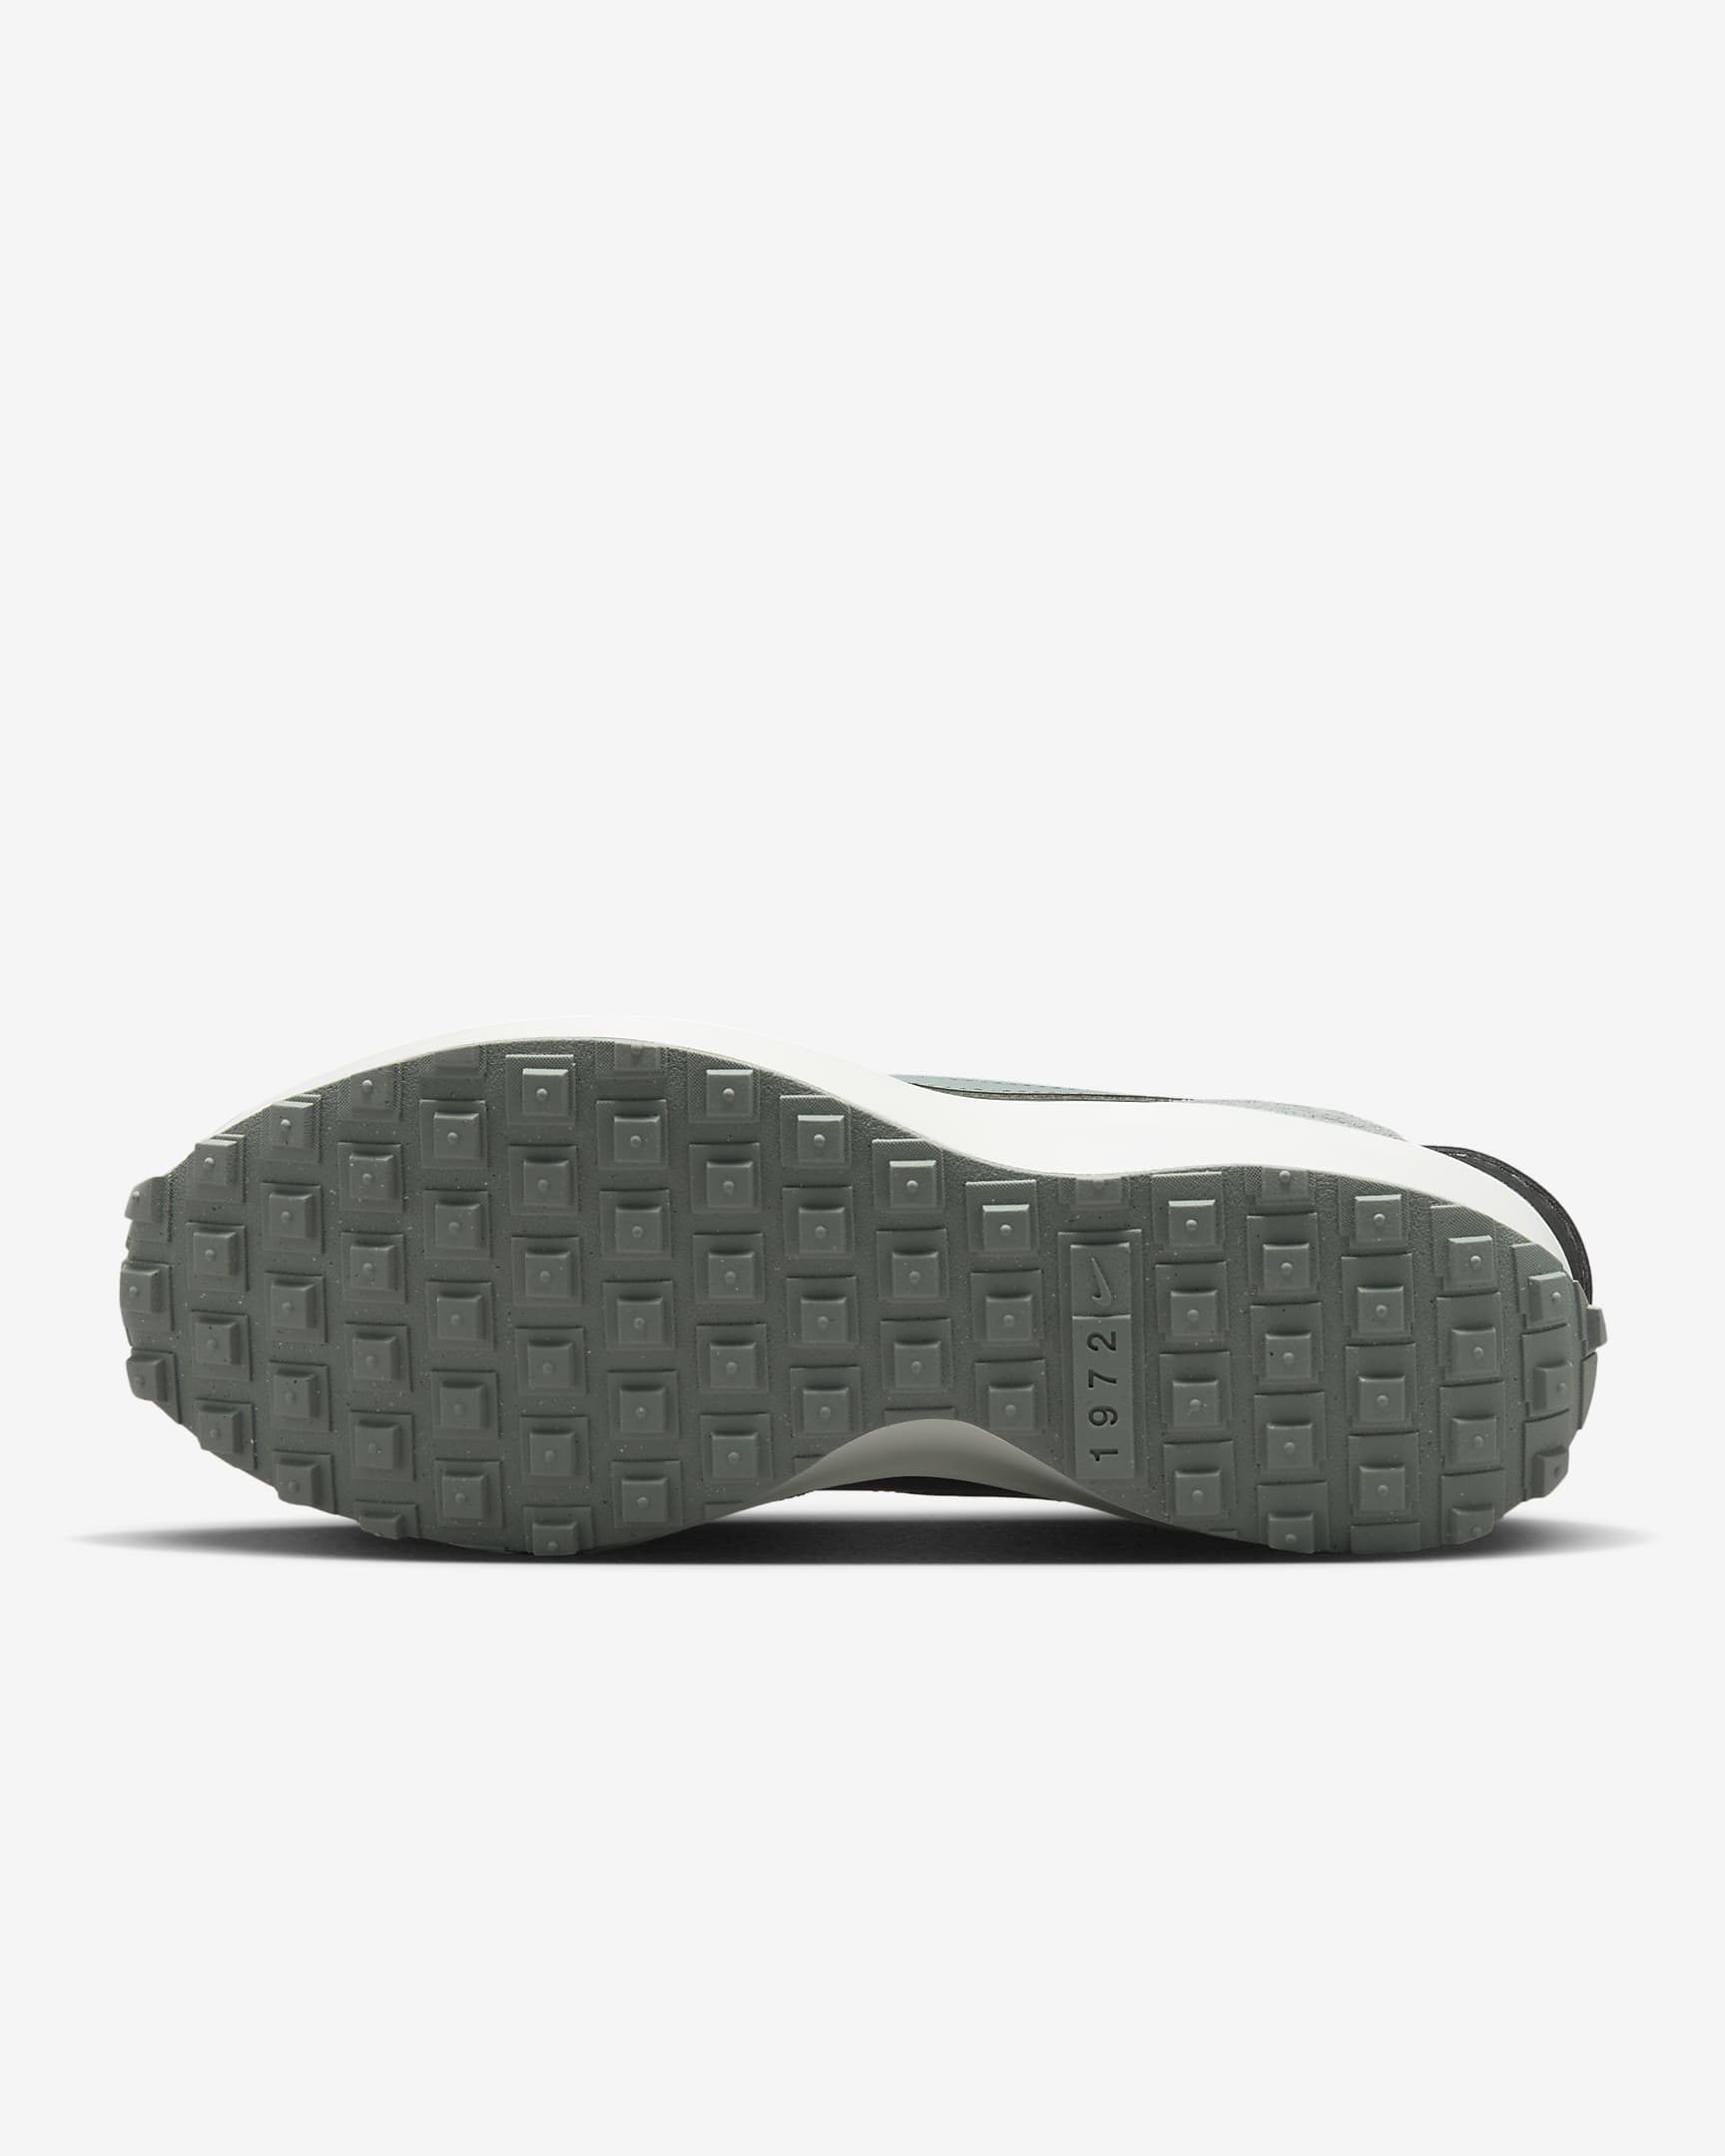 Nike Waffle Debut Women's Shoes - Summit White/Light Silver/Mica Green